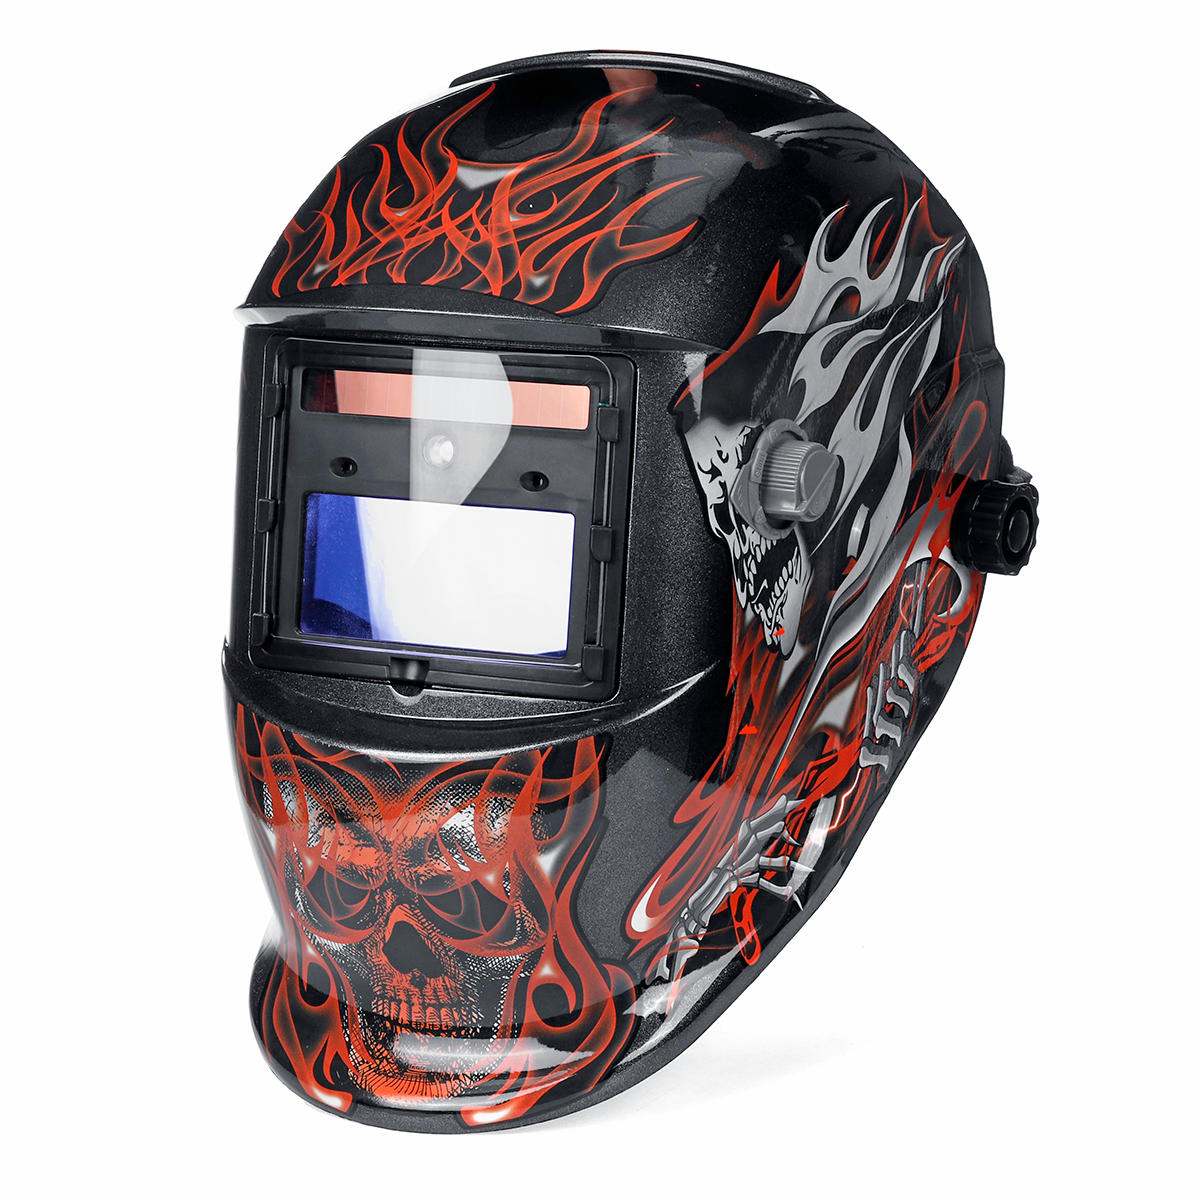 Solar Auto Darkening Welding Helmet Arc Tig Mig Dimming Grinding Mask